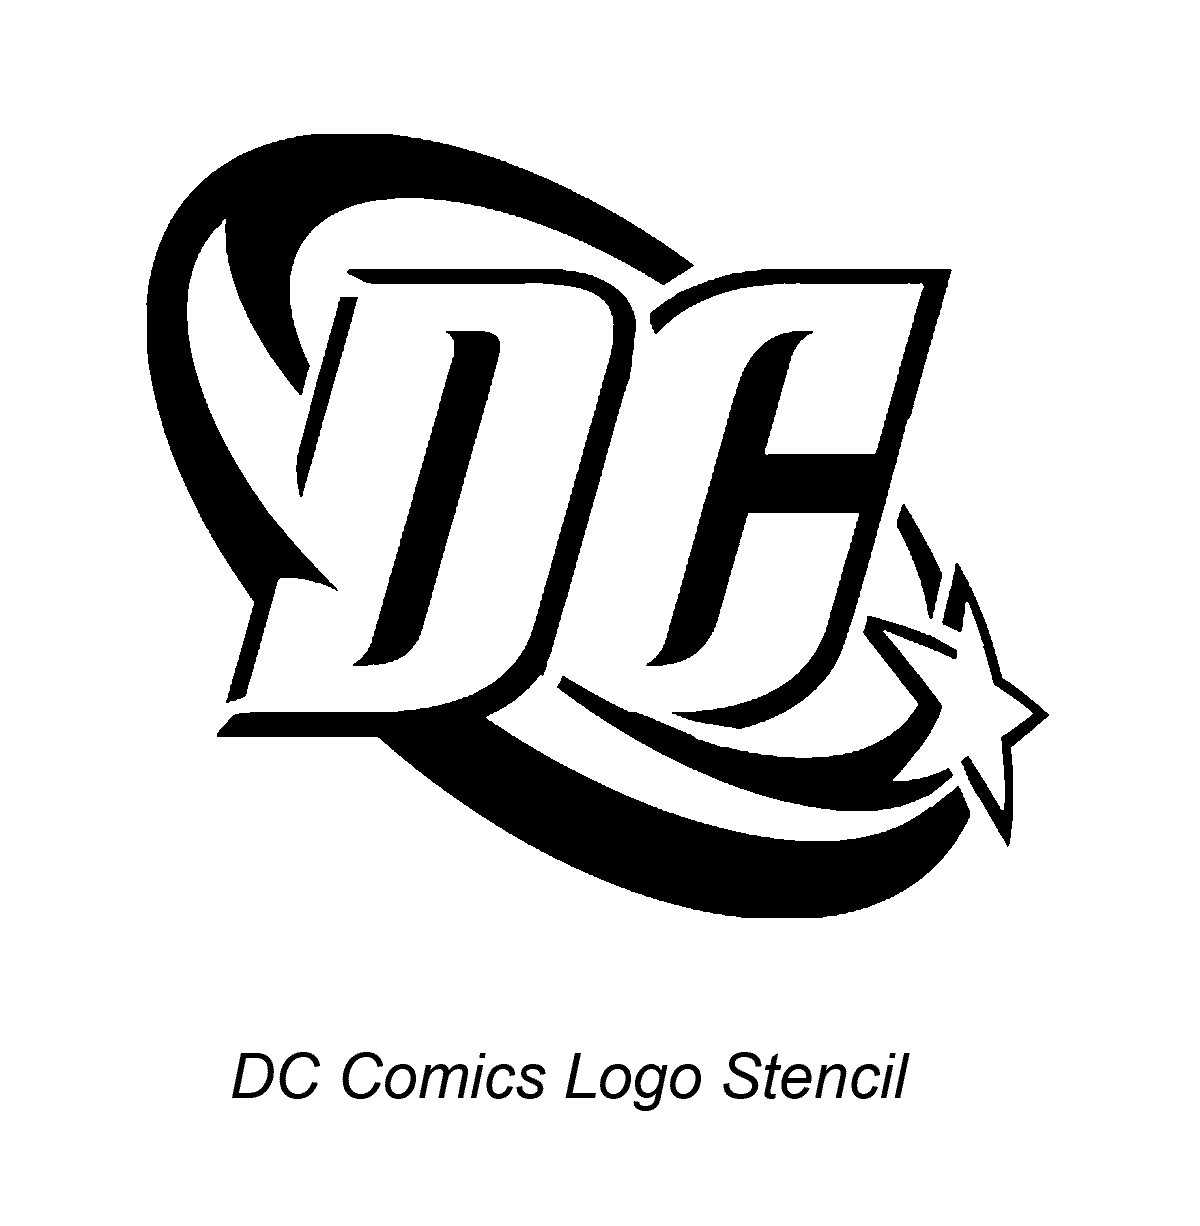 Black and White DC Logo - Dc Comics Logo Image.gif 1 200×1 226 Pixels. Design. DC Comics